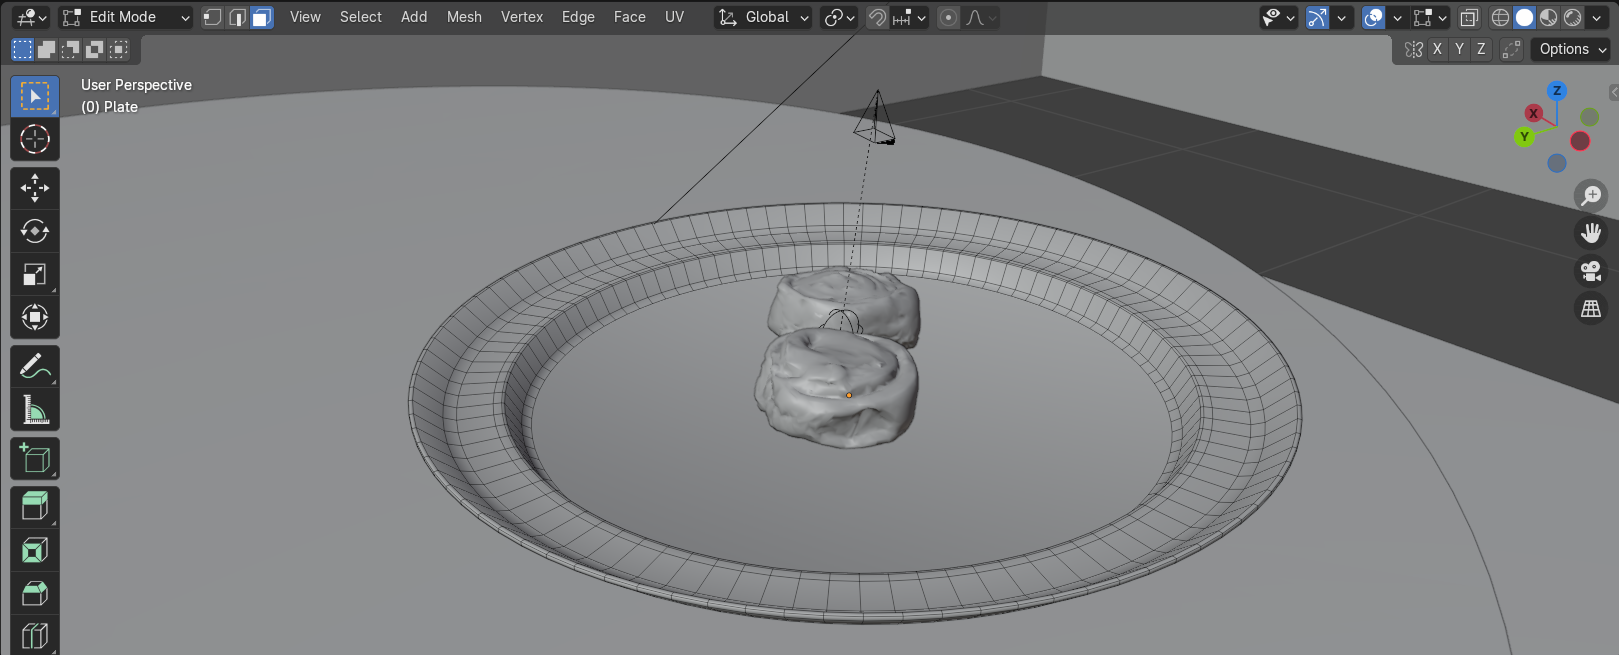 modeling - Shadows along edges of mesh in 3D View - Blender Stack Exchange